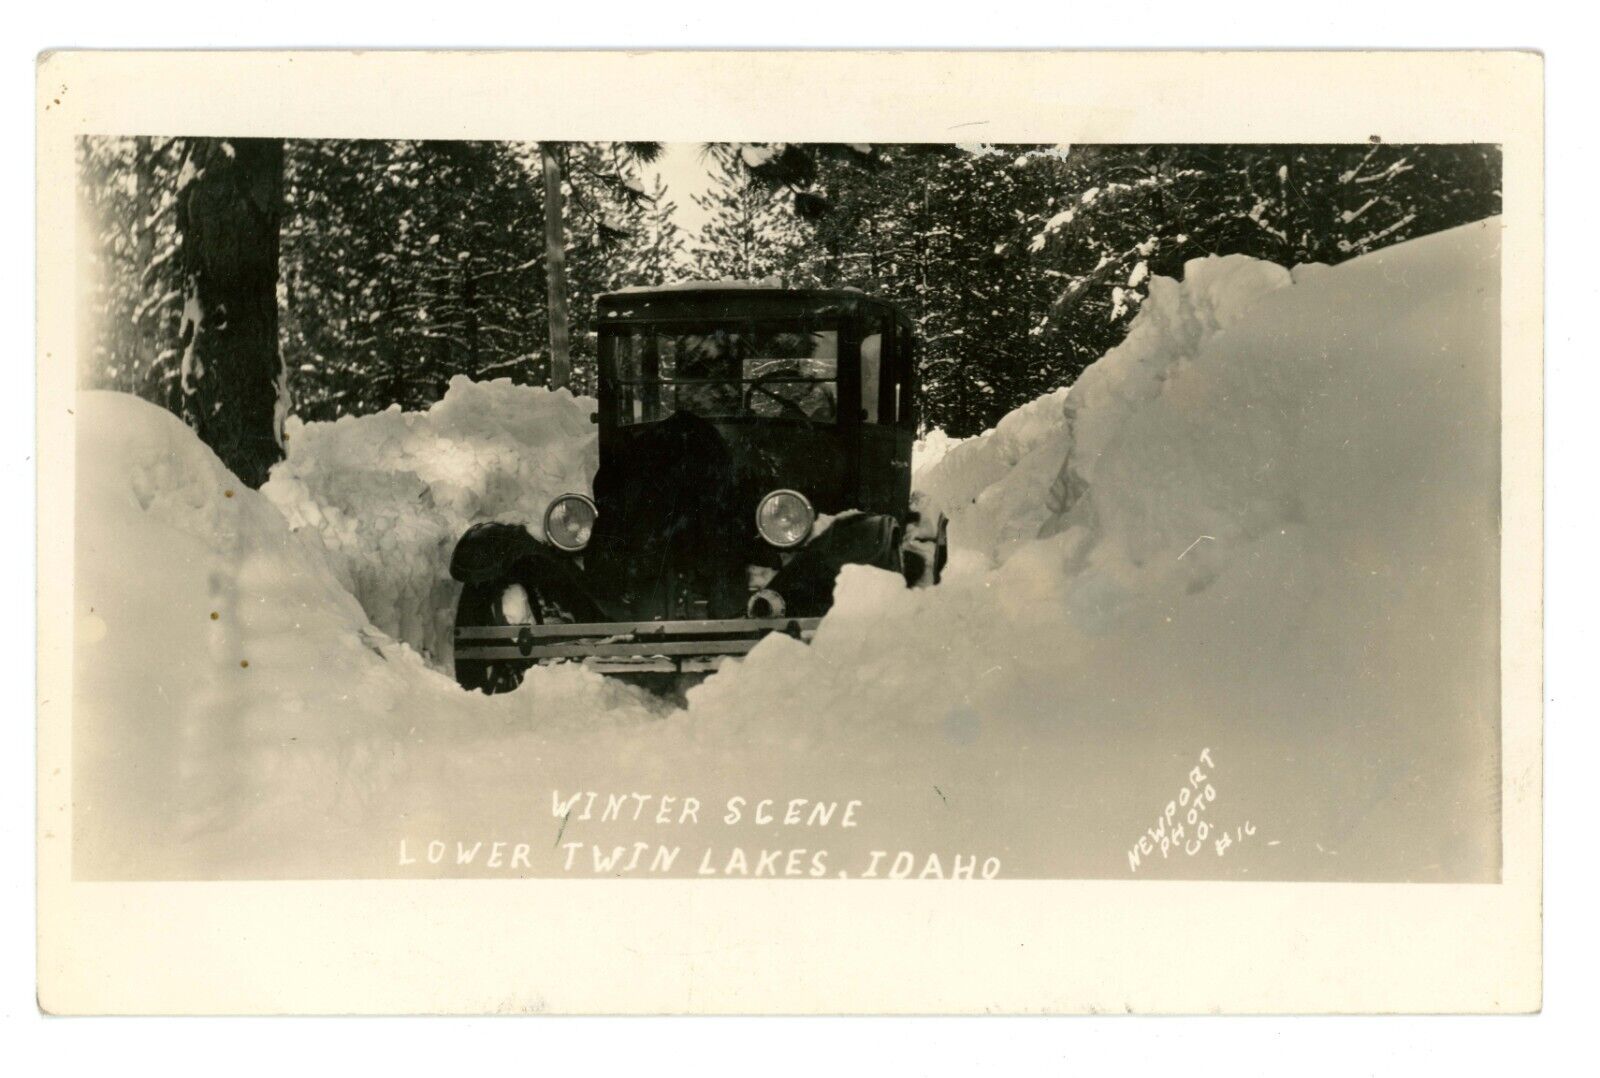 RPPC Lower Twin Lakes, Idaho - Truck Stuck in Snow Vintage Photo Postcard 1920s